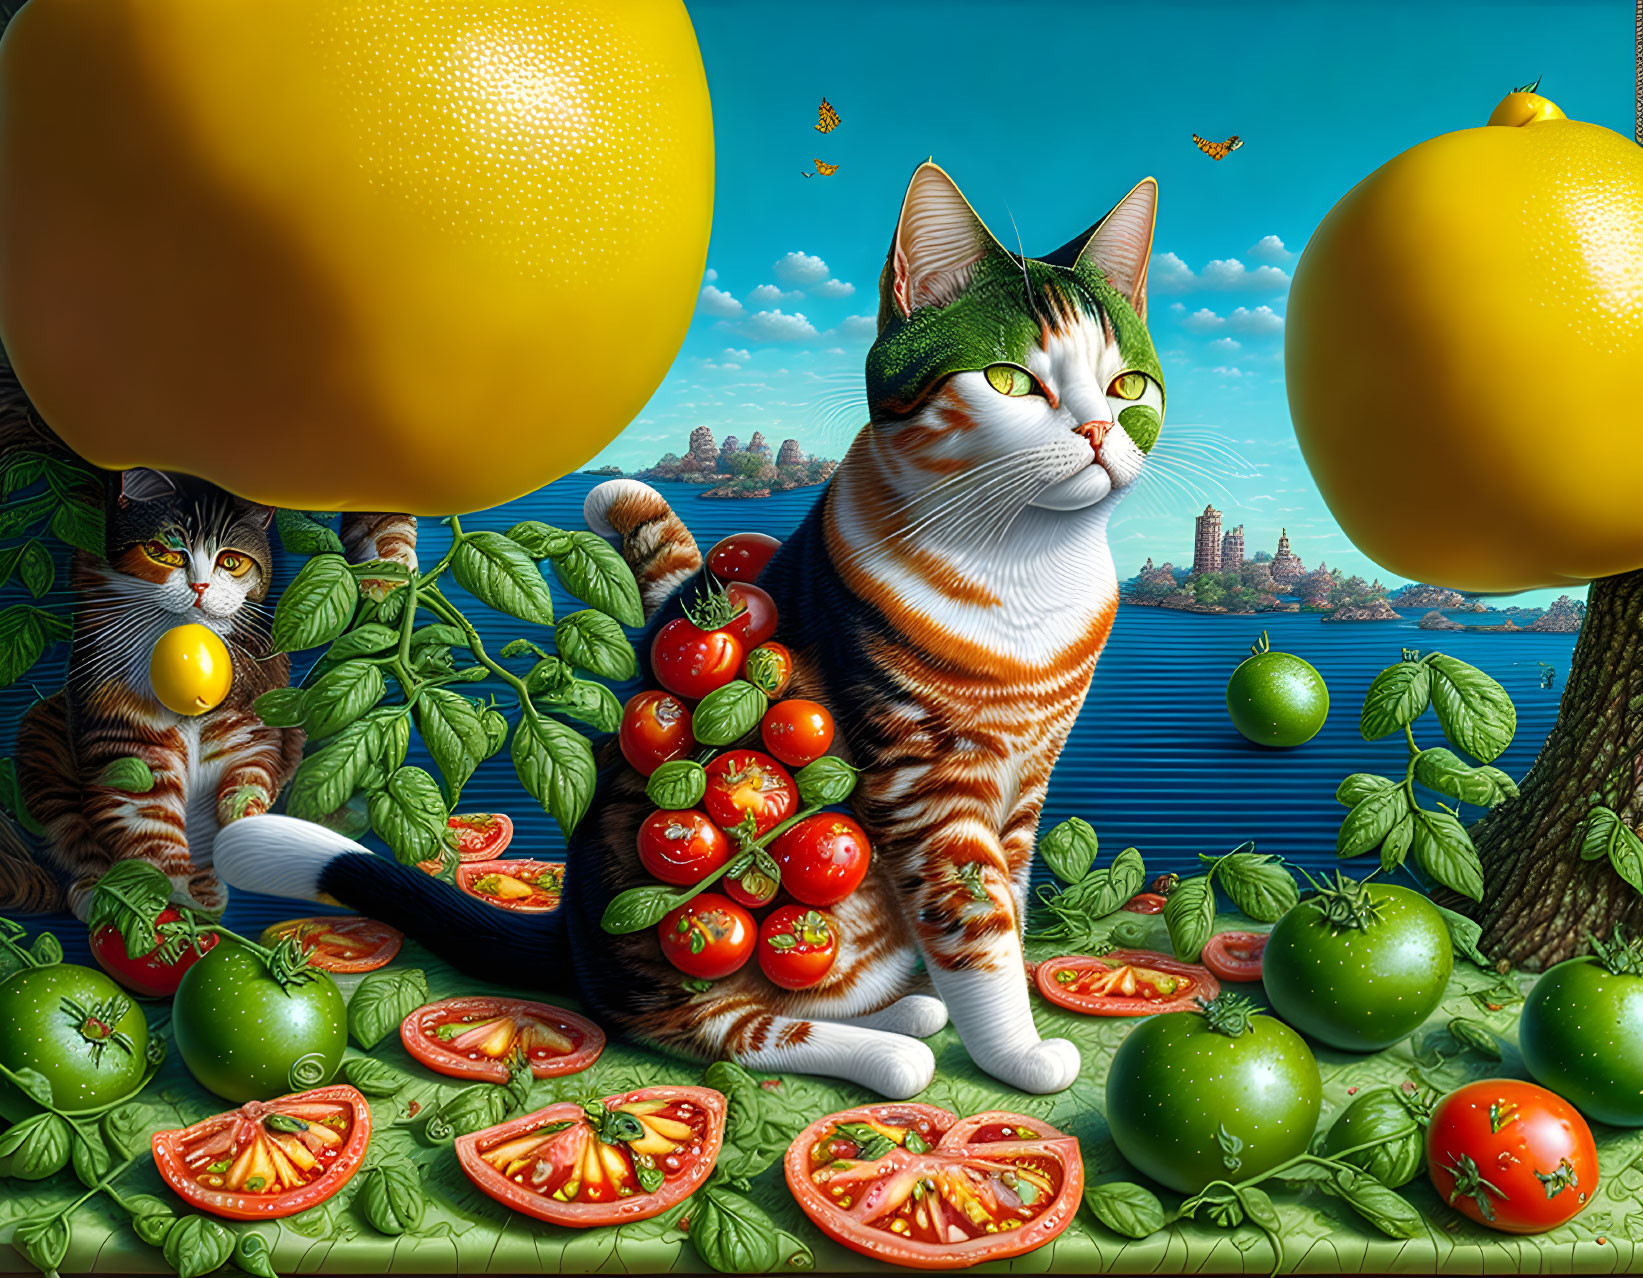 Tomato Salad cat playing Lemon, extreme details, f